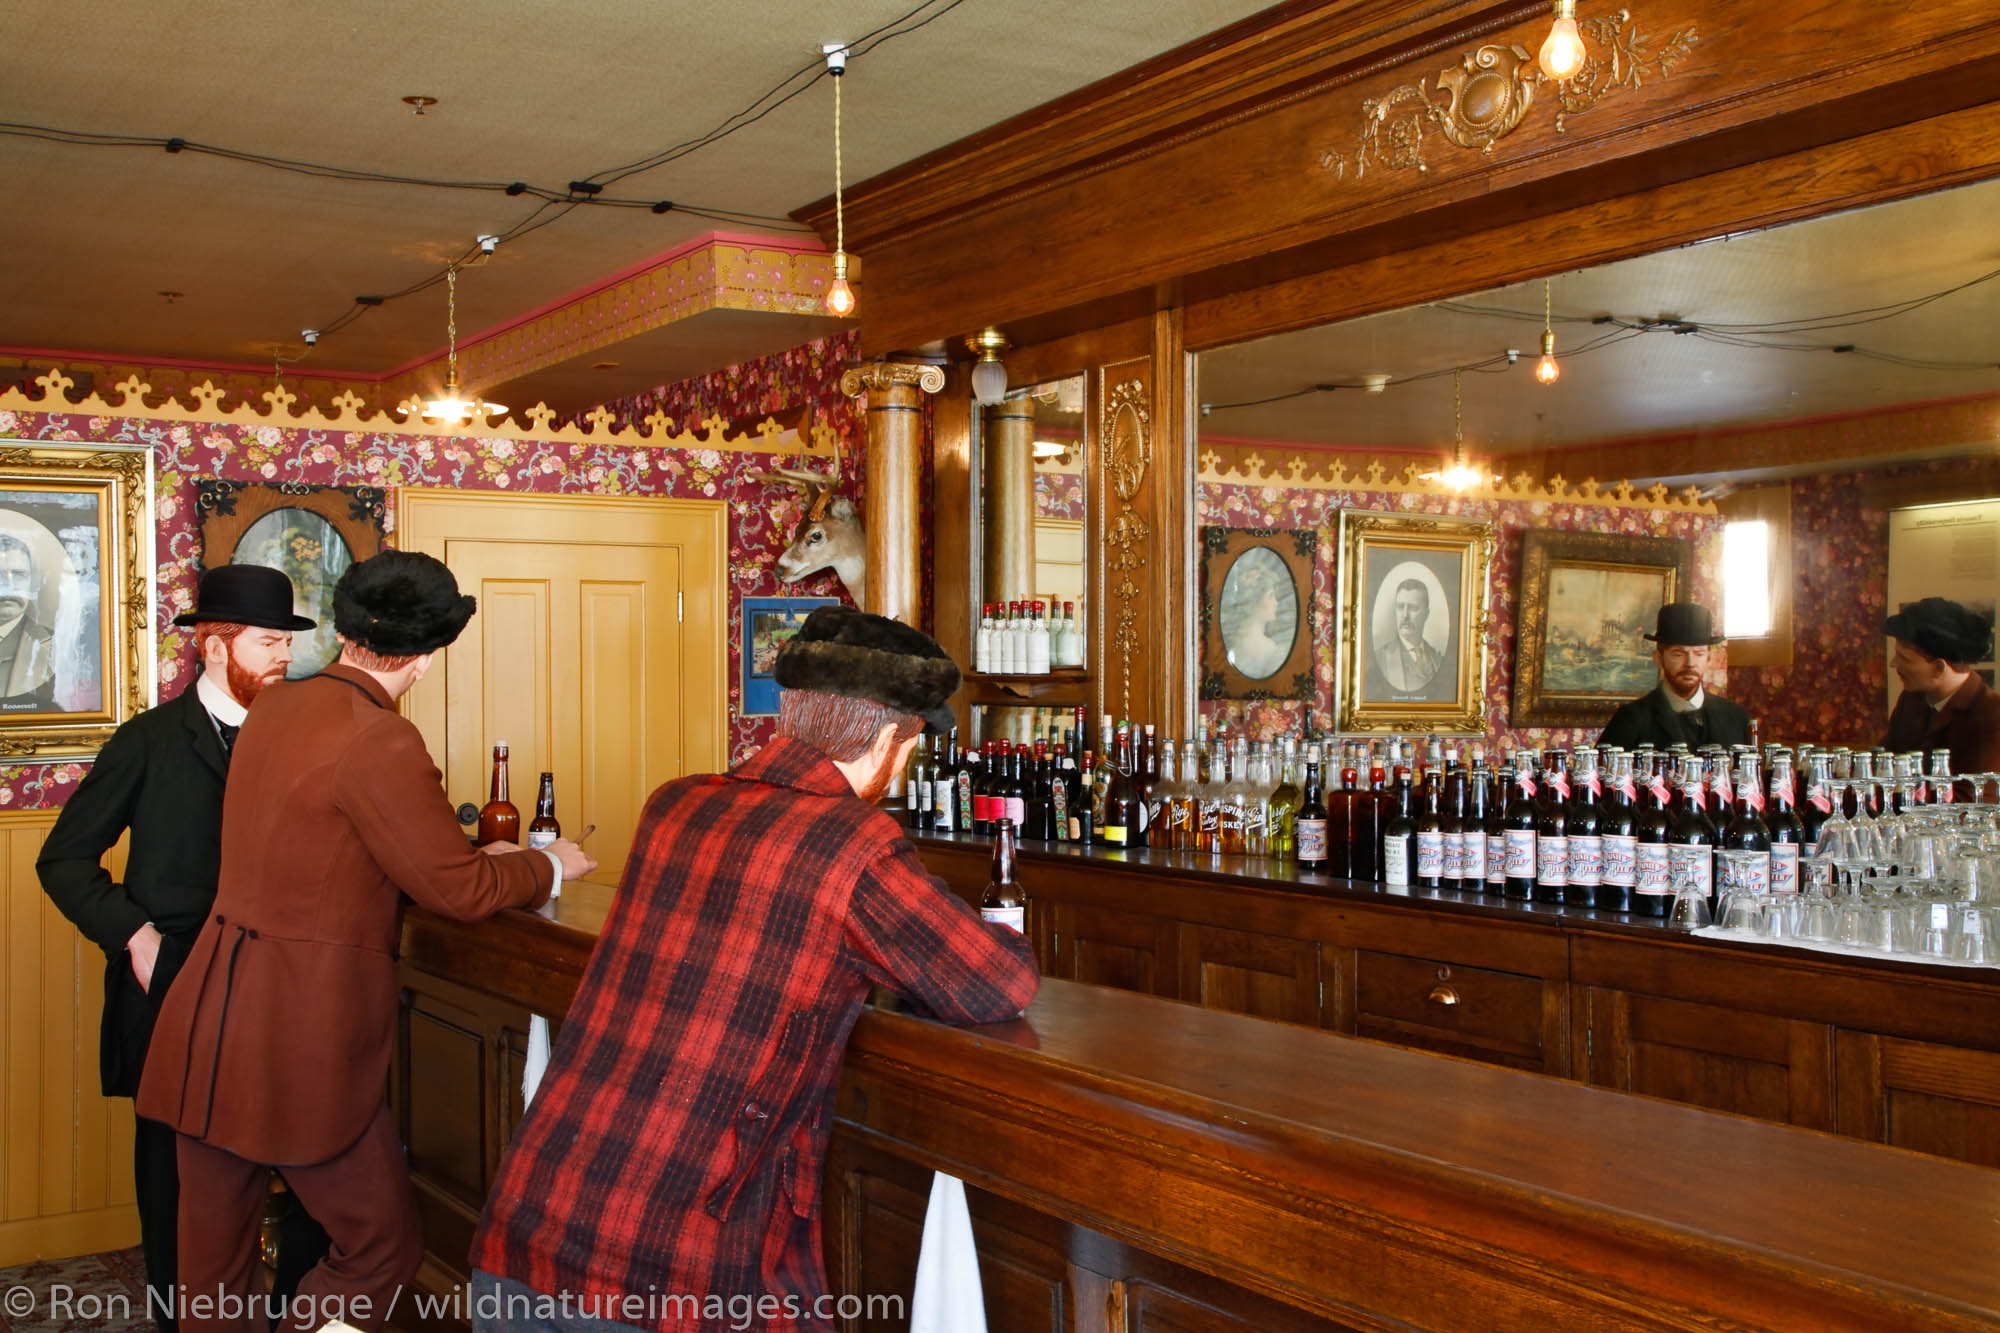 Inside the restored Mascot Saloon in Historic downtown Skagway, Alaska.